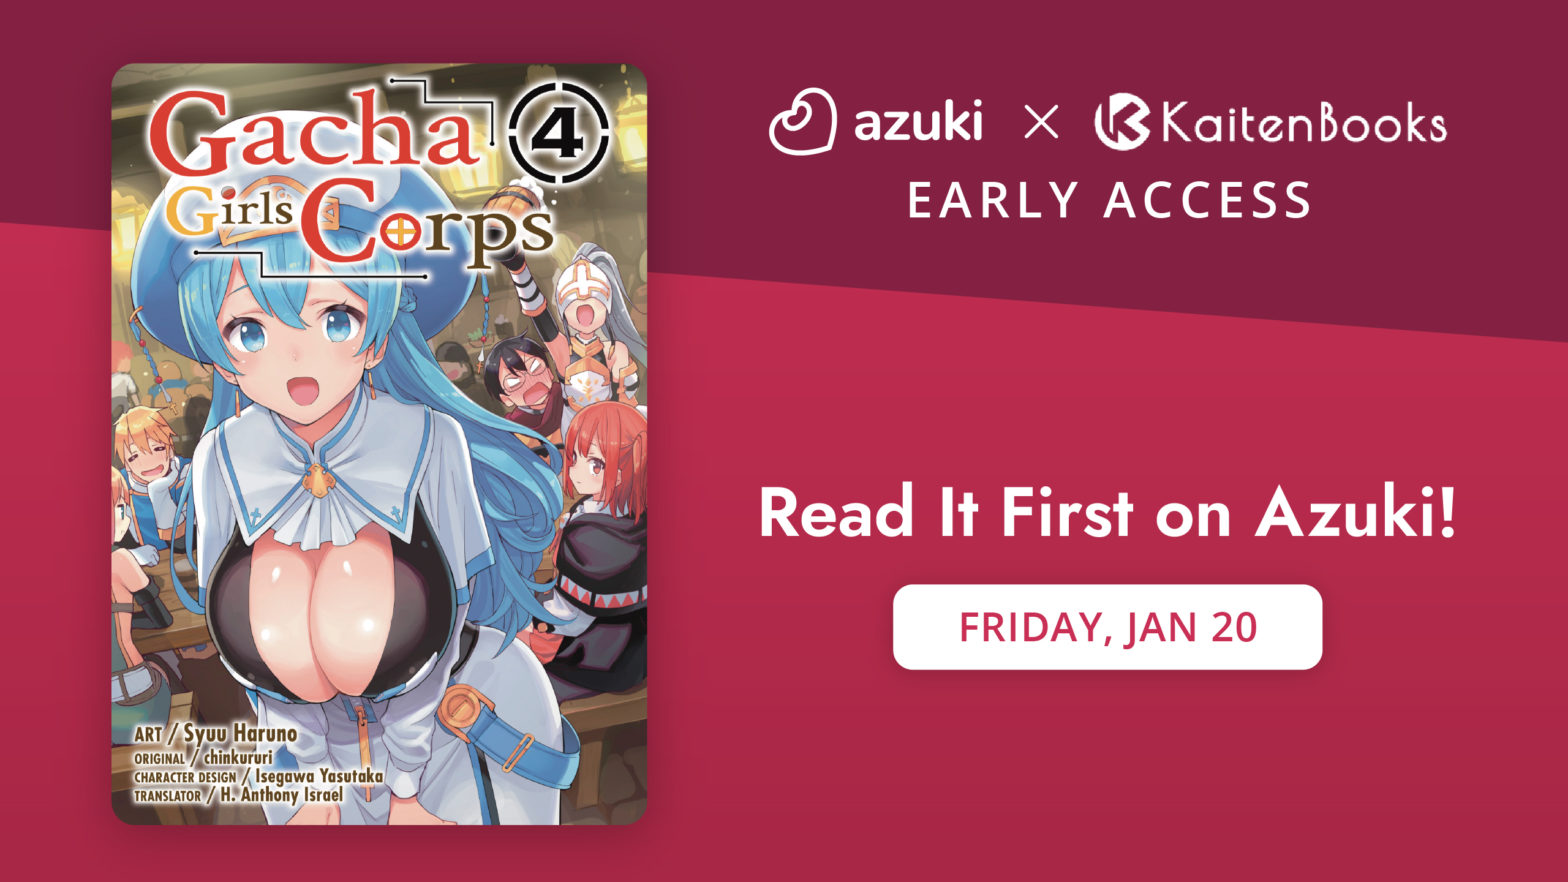 Gacha Girls Corps Volume 4. Azuki and Kaiten Books Early Access. Read it first on Azuki. Friday, January 20.